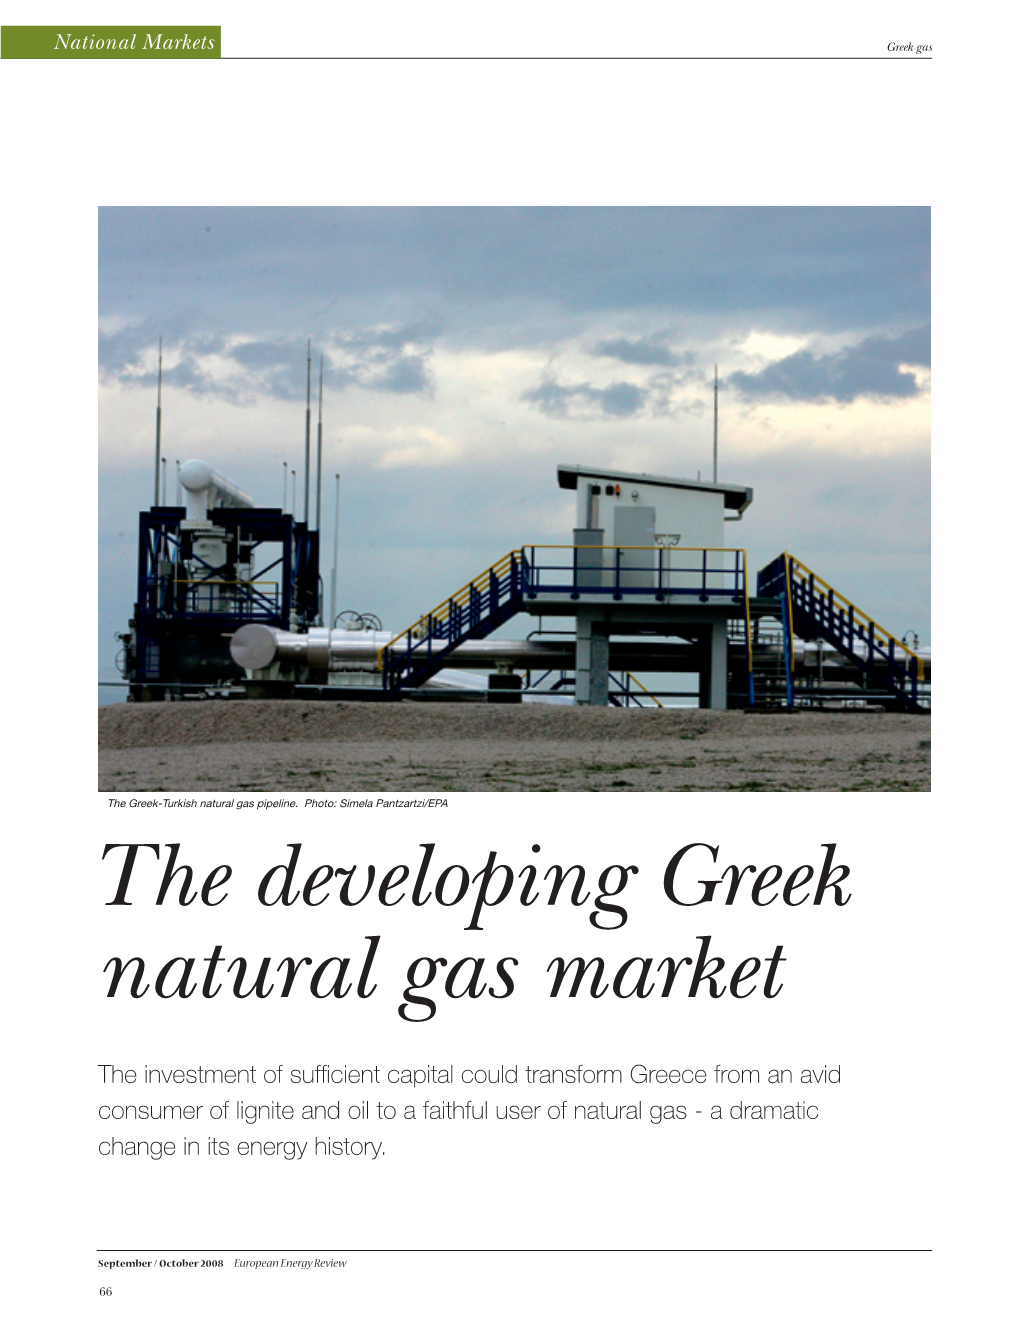 The Developing Greek Natural Gas Market